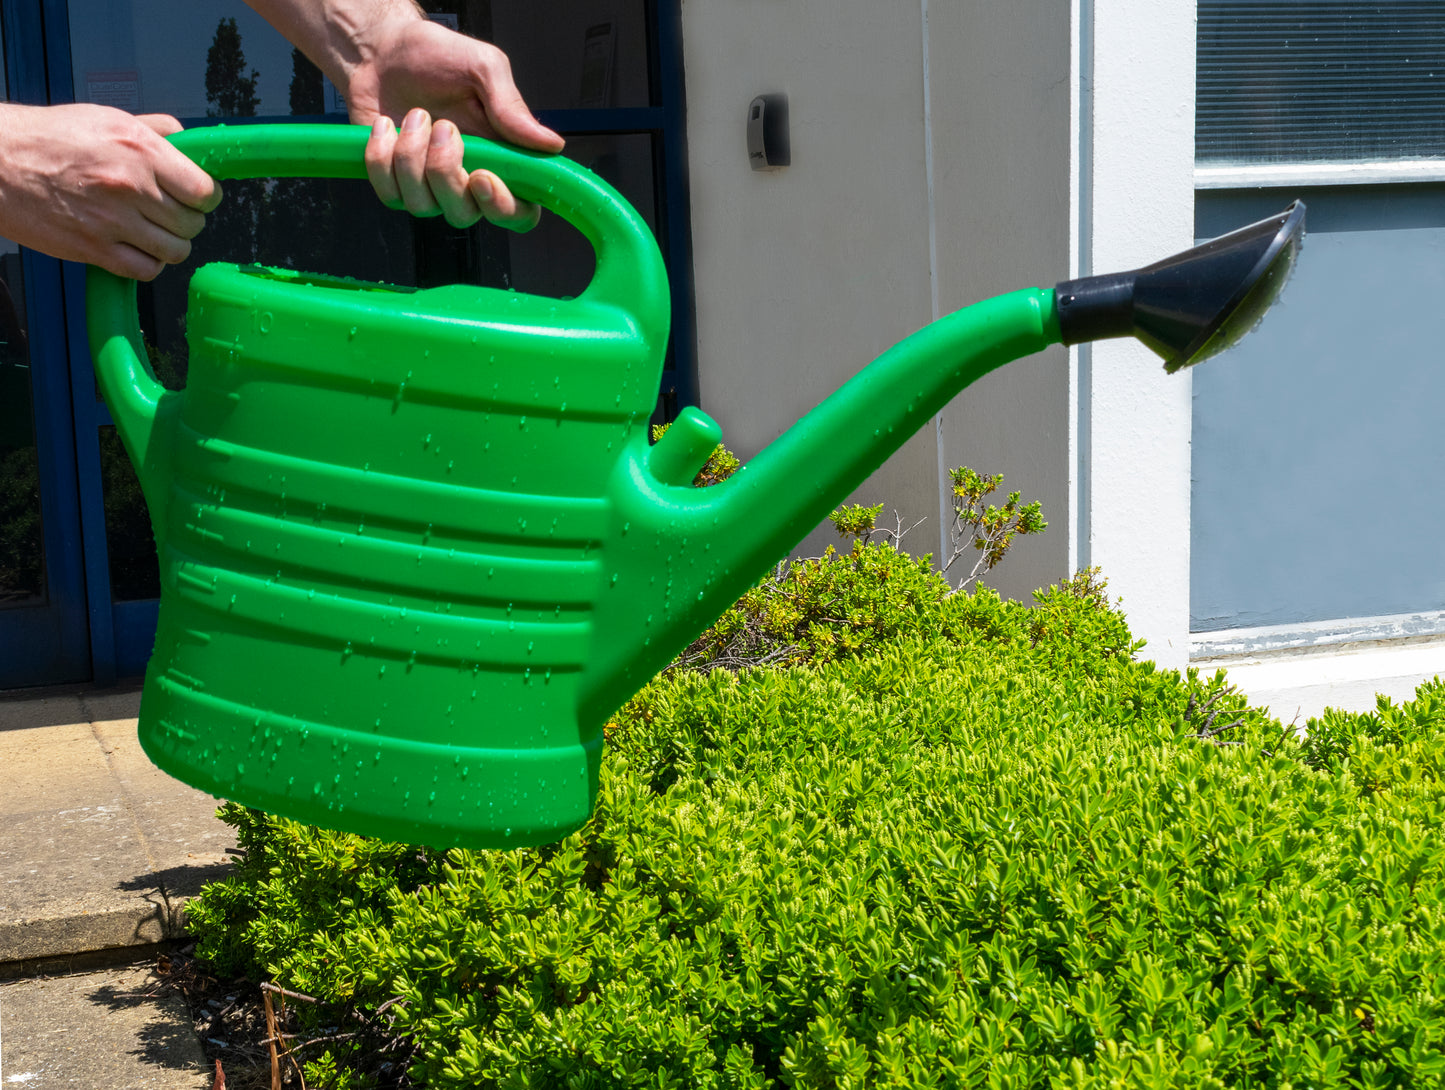 Garden Watering Can 10 Litres